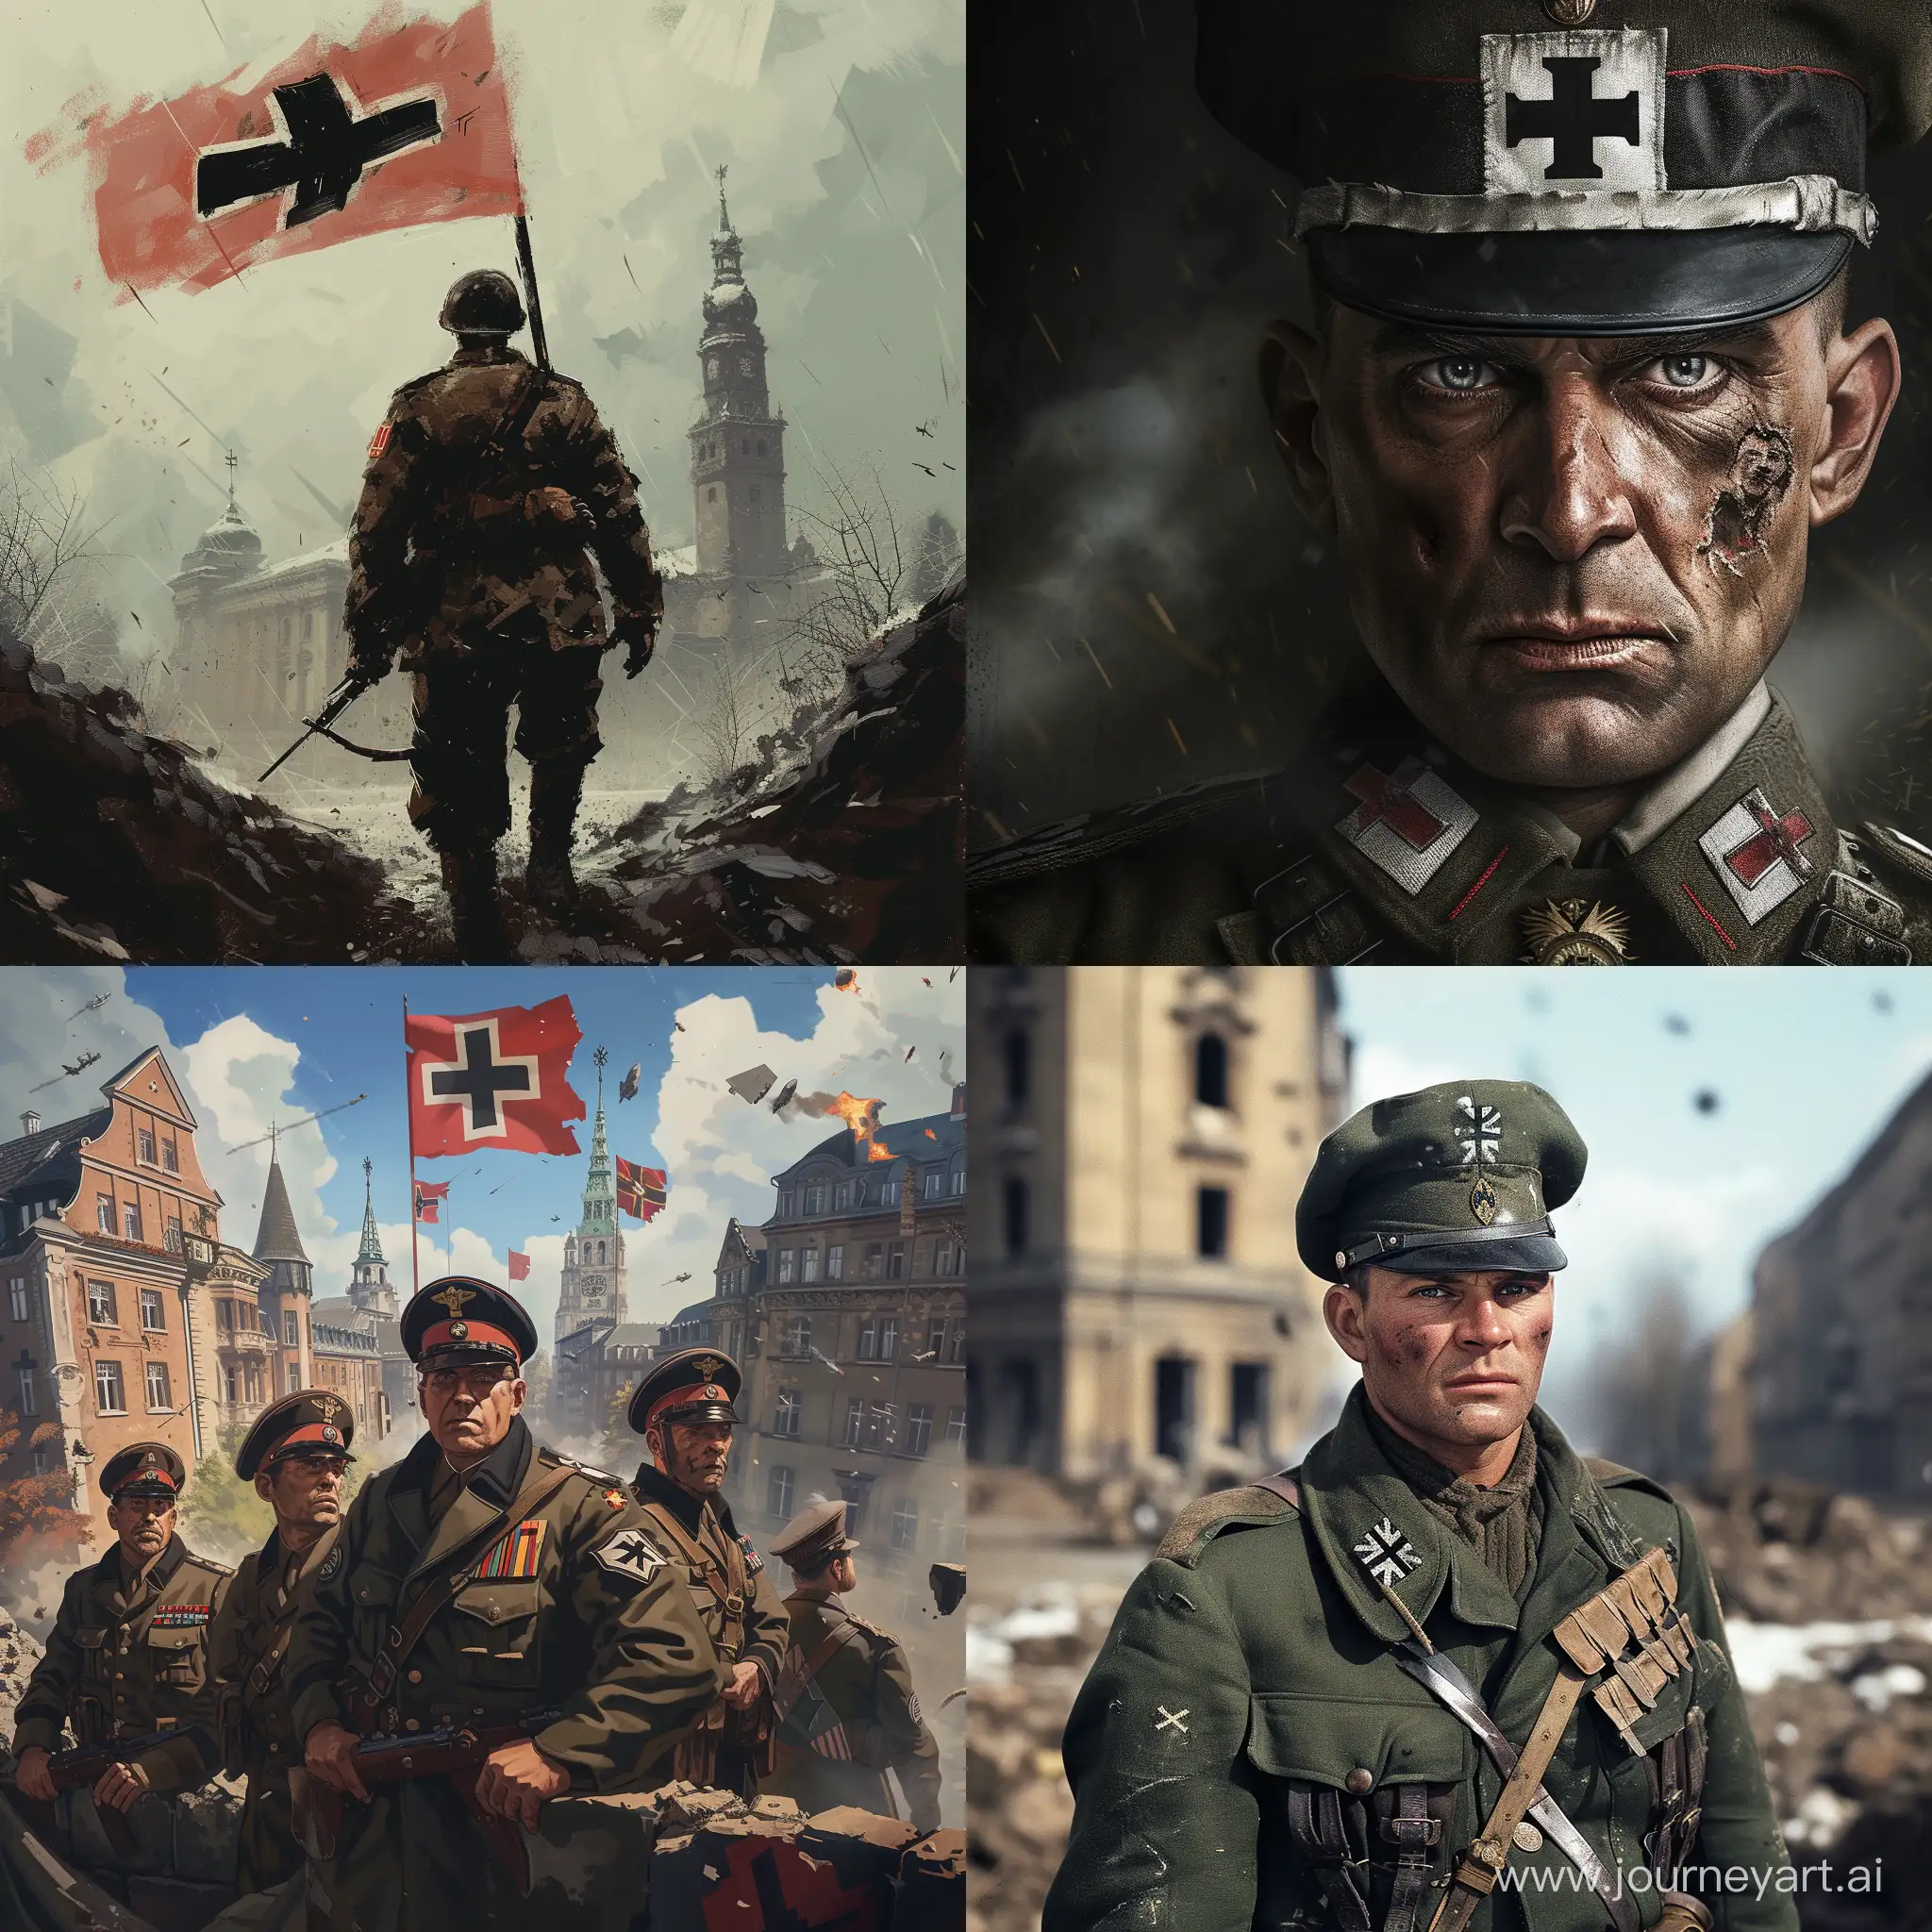 Alternate-History-German-Victory-World-War-II-Scene